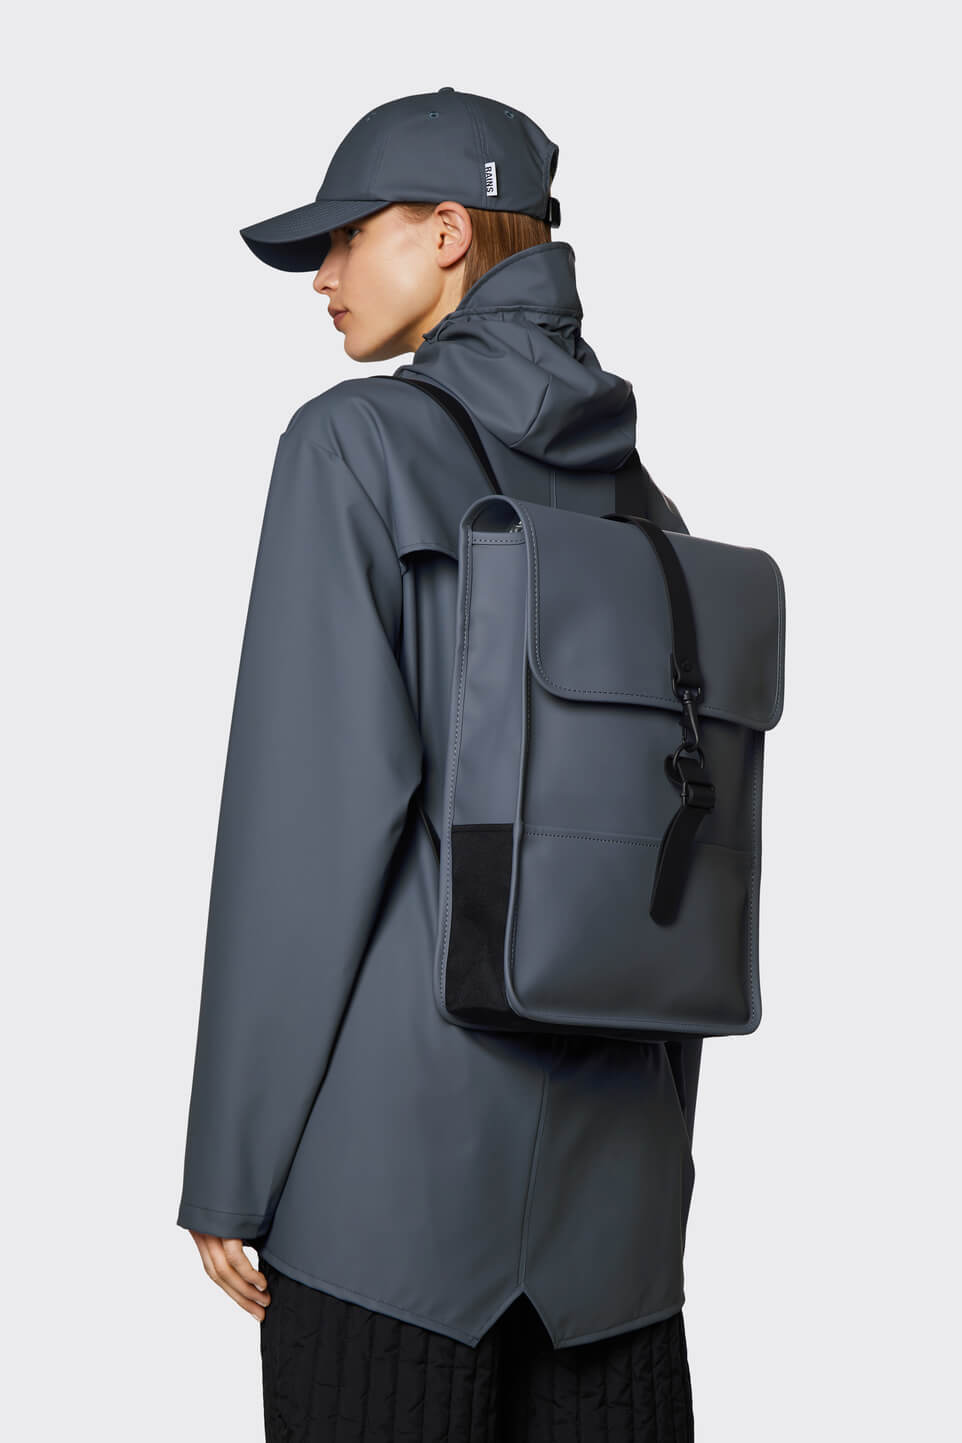 Mini Backpack | Wood | Waterproof | by Rains - Lifestory - Rains